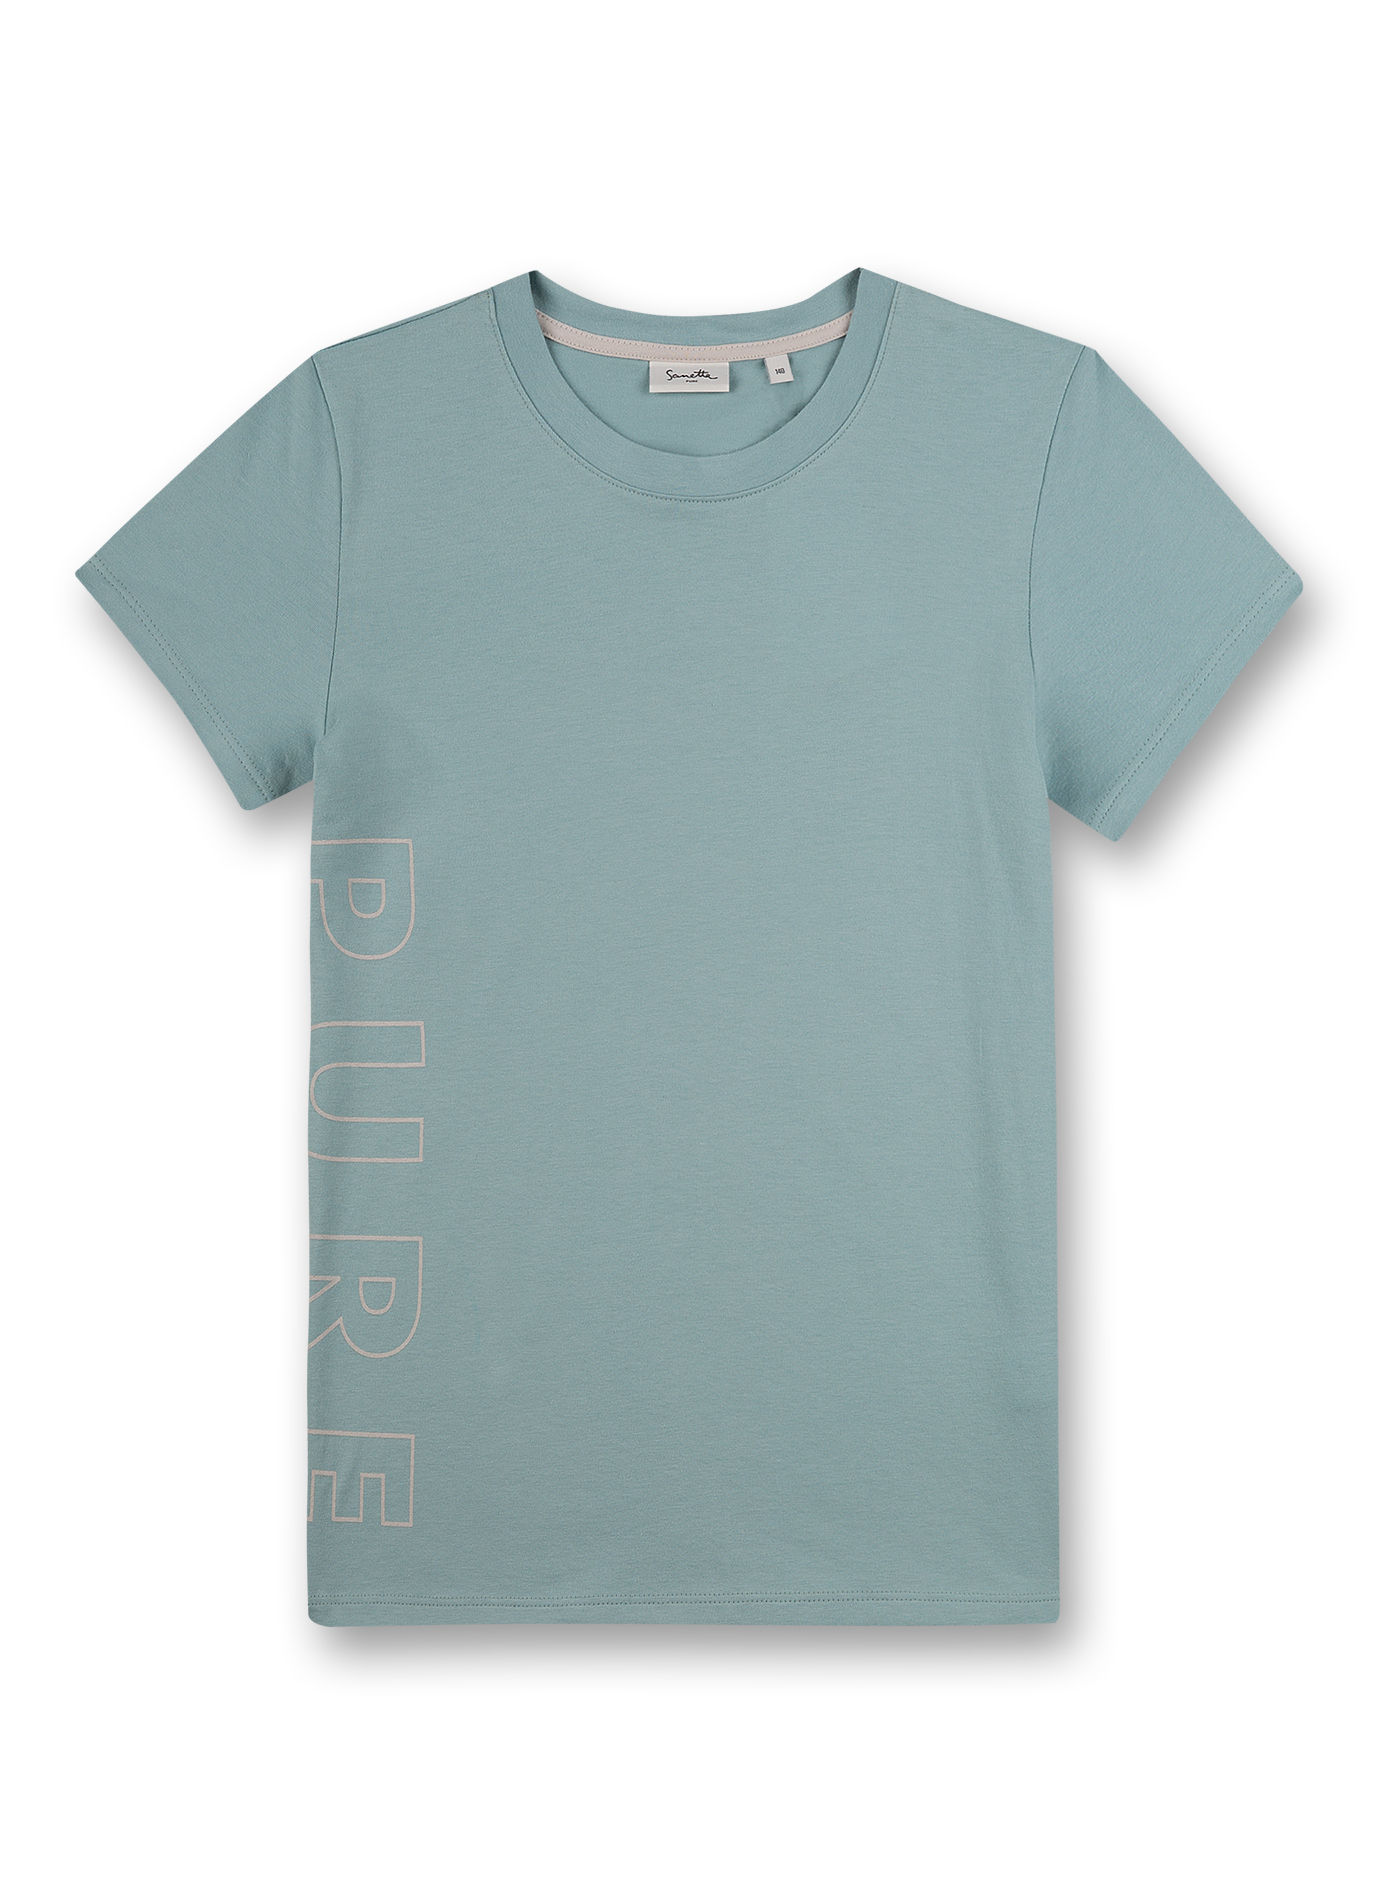 Mädchen T-Shirt Hellblau